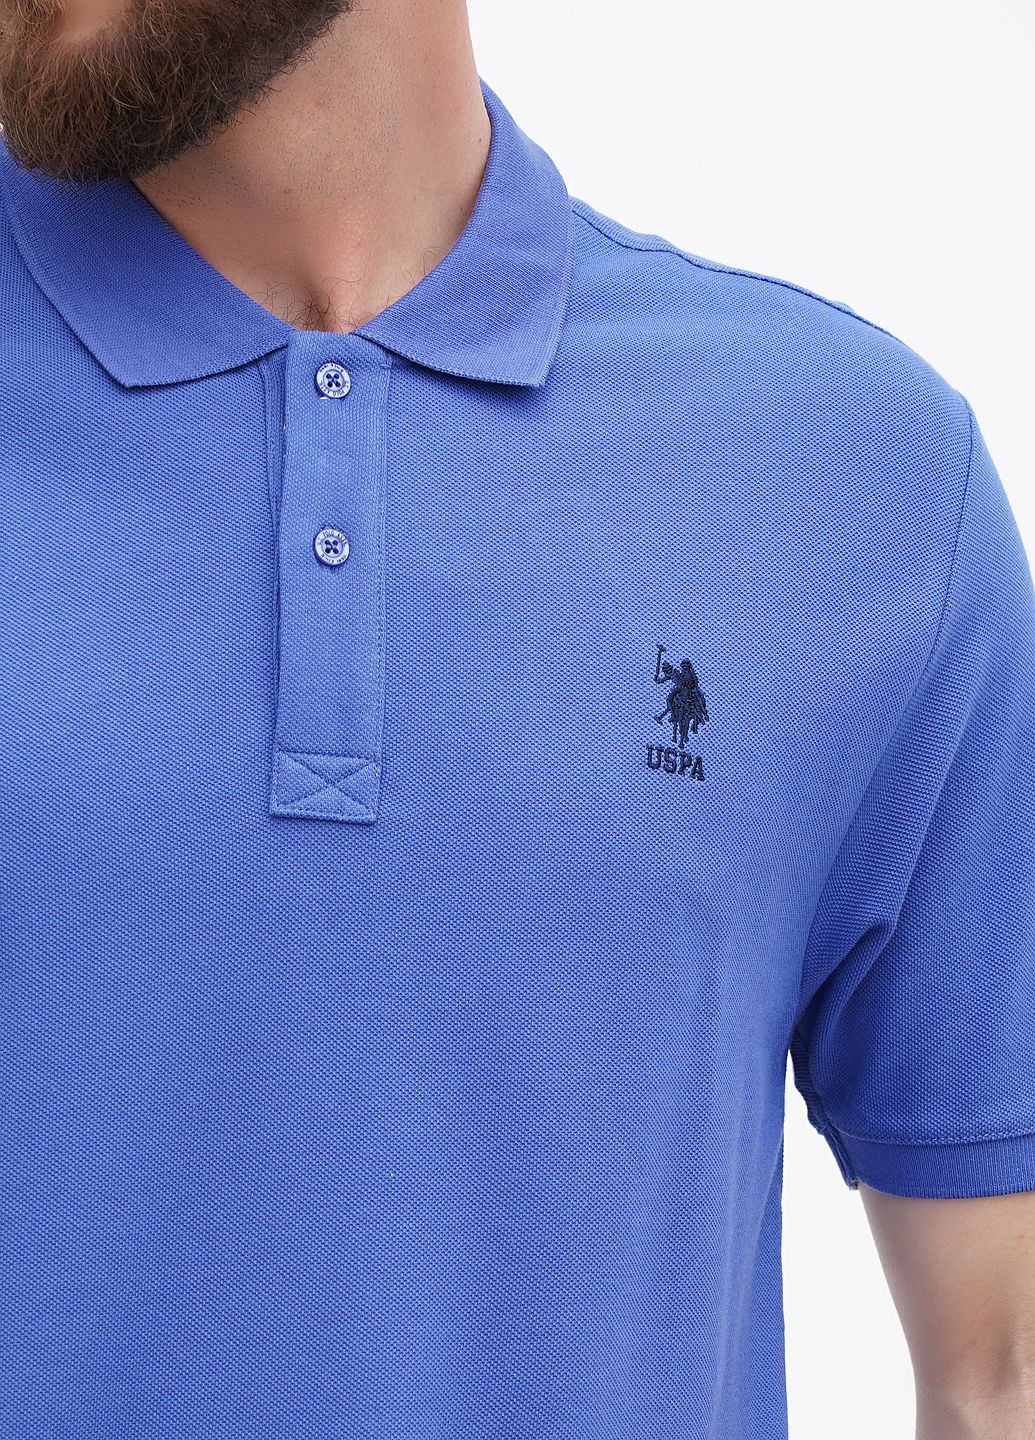 Темно-синяя футболка-футболка поло u.s. polo assn мужская для мужчин U.S. Polo Assn.